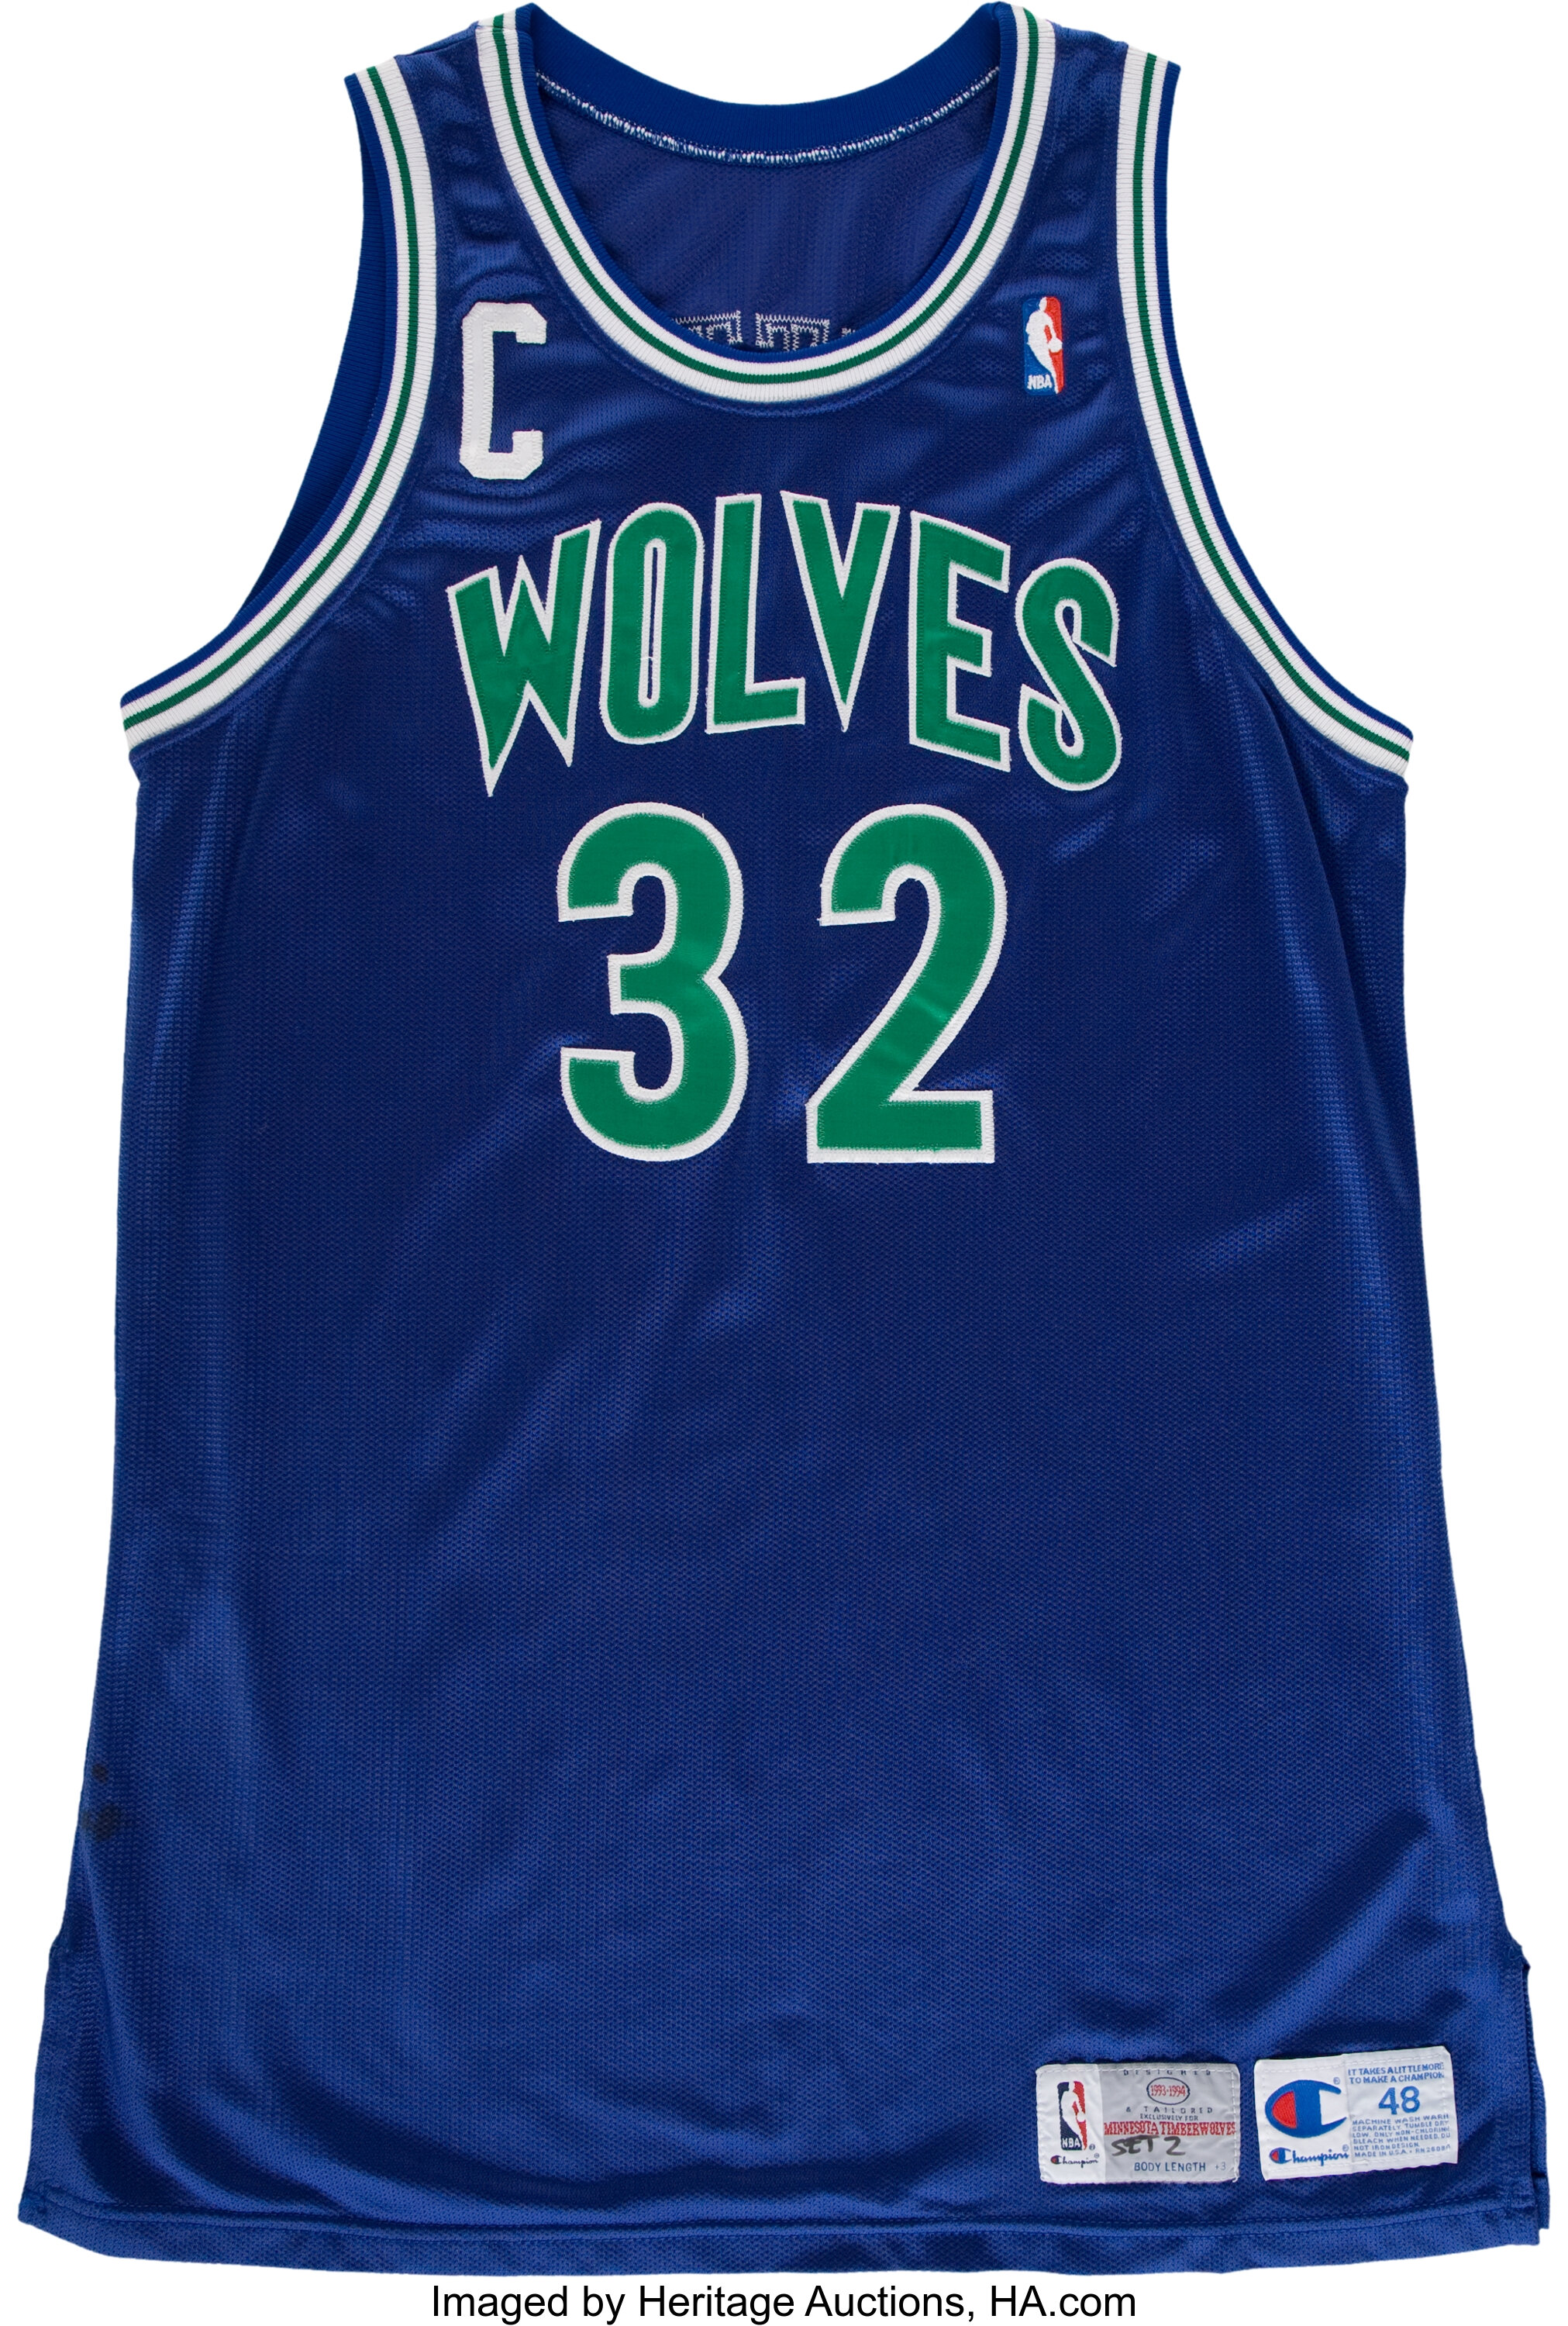 Minnesota Timberwolves basketball practice jersey #31